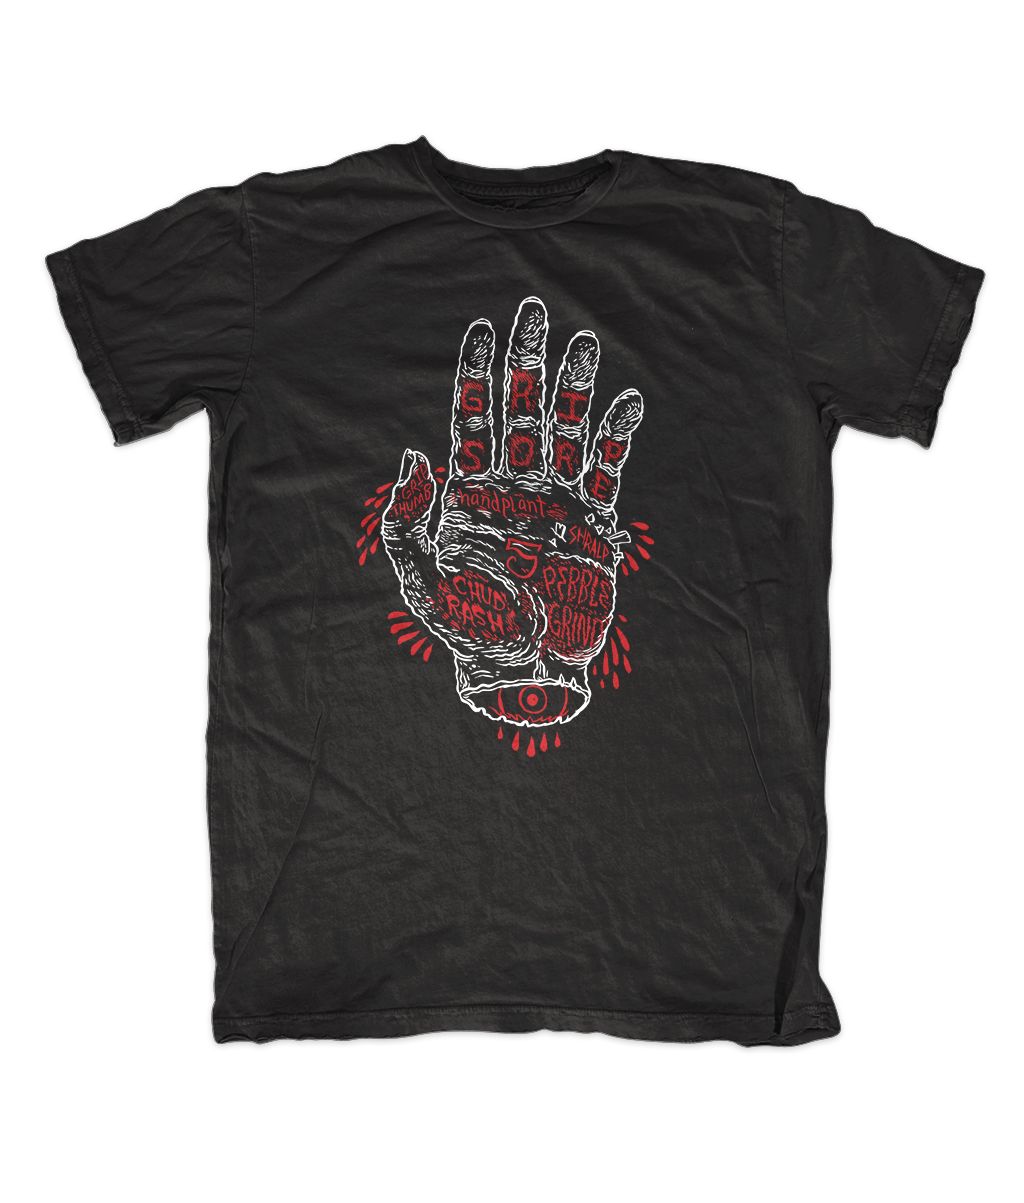 limited edition Apparel Design tee shirt art palm reader fortune teller skateboarding Kungfutoast